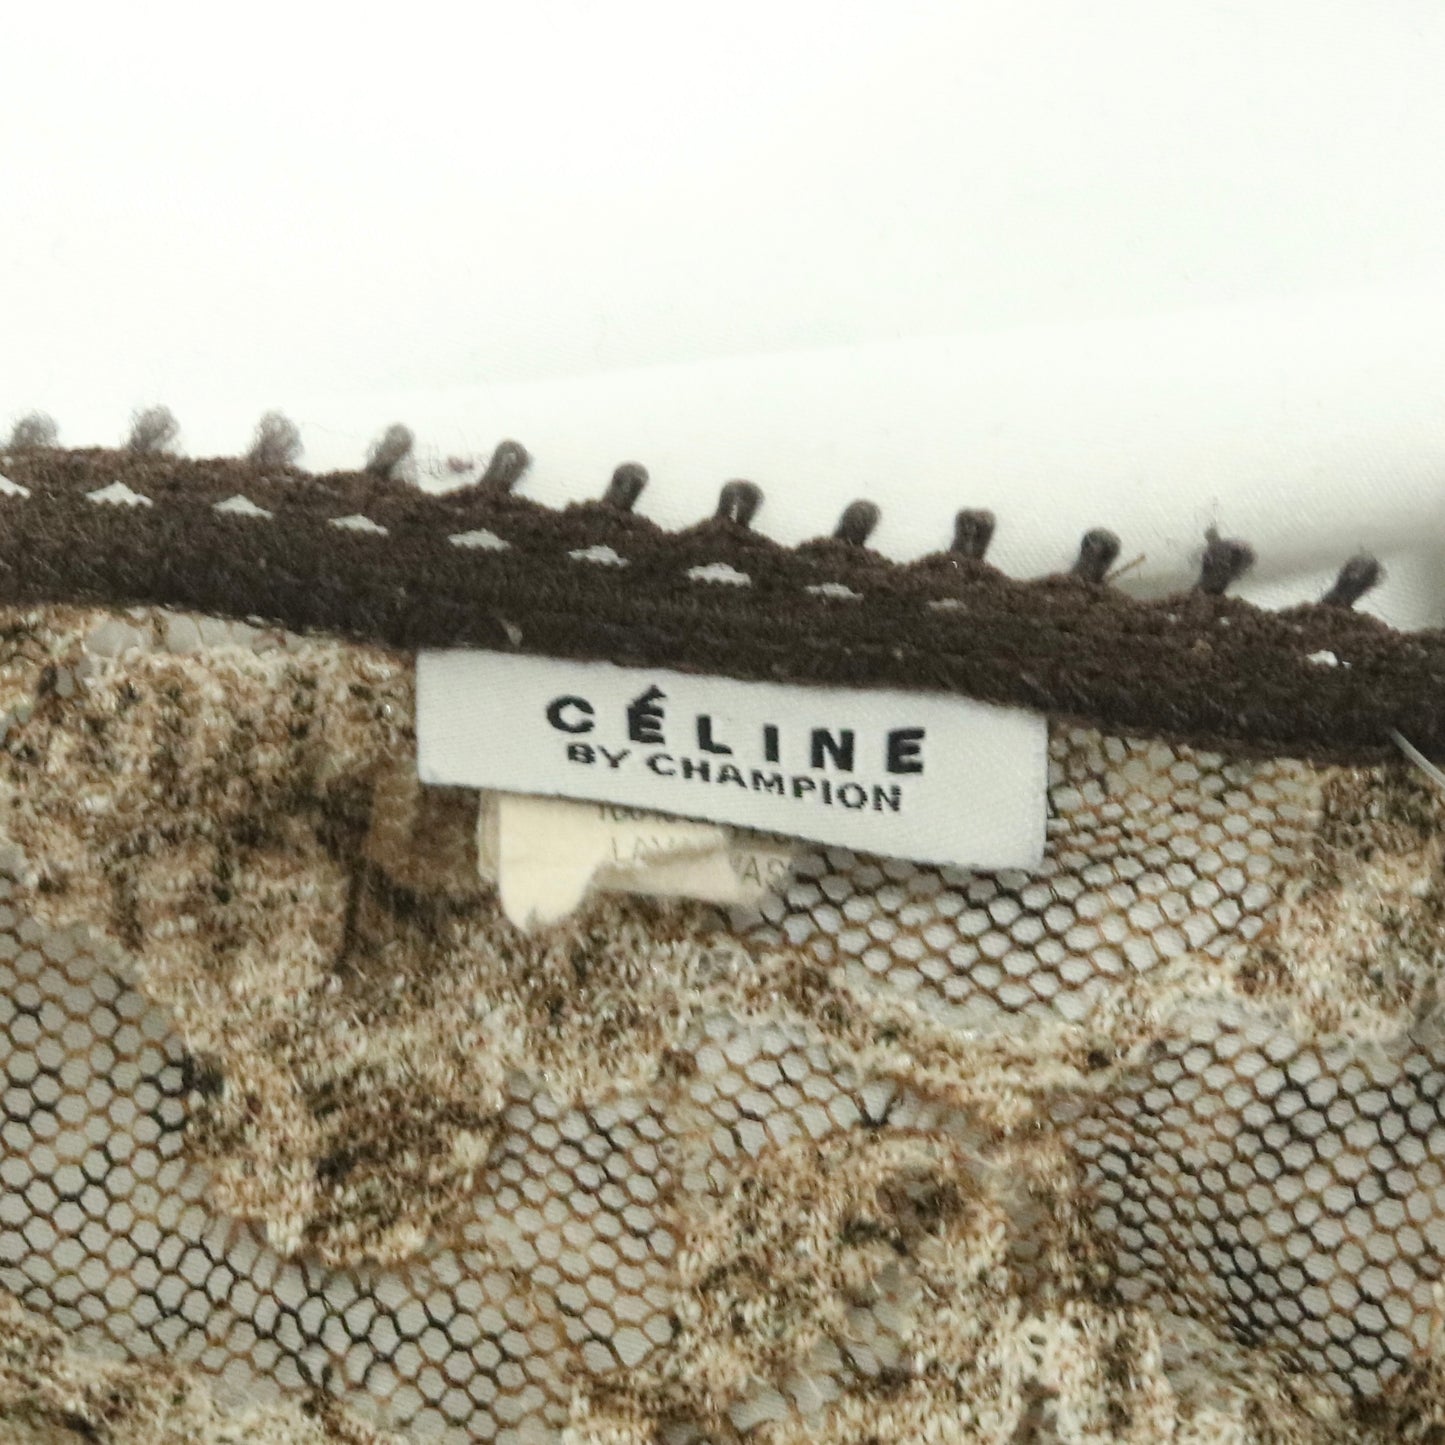 00's "celine by champion" lace up flower design blouse